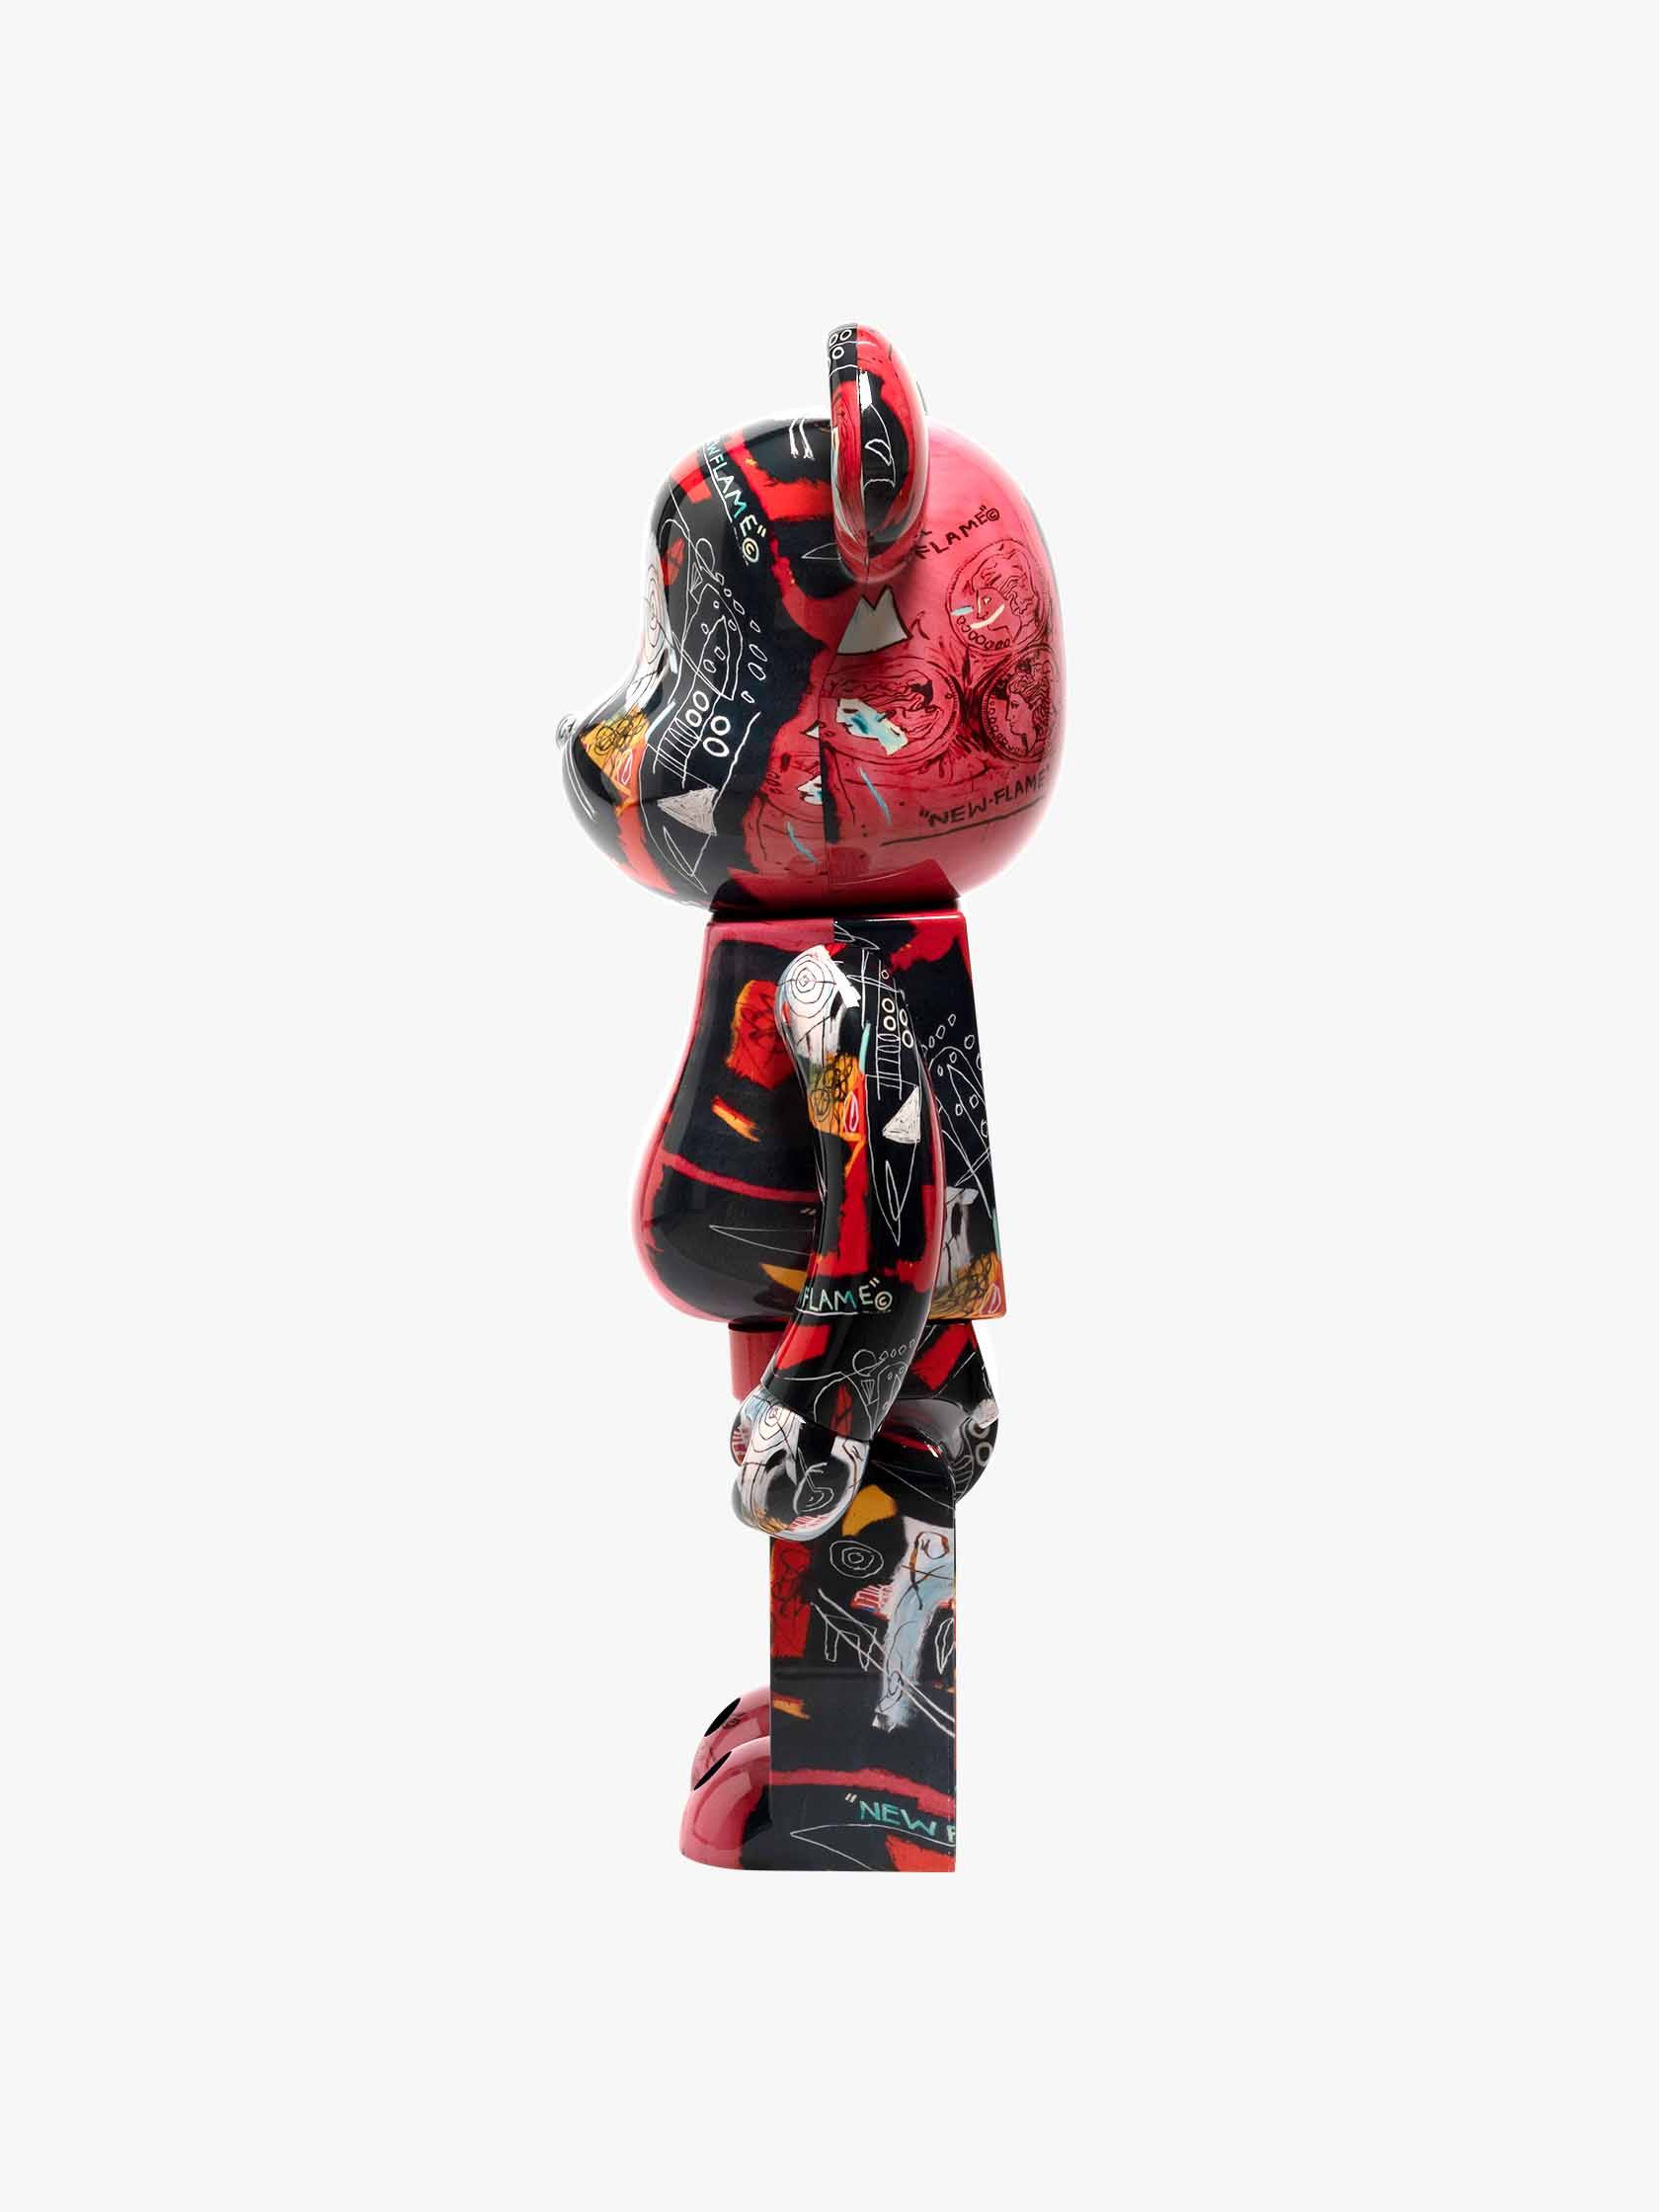 BE@RBRICK Andy Warhol x Jean-Michel Basquiat V1 (New Flame) 1000% by Medicom Toy - Mankovsky Gallery